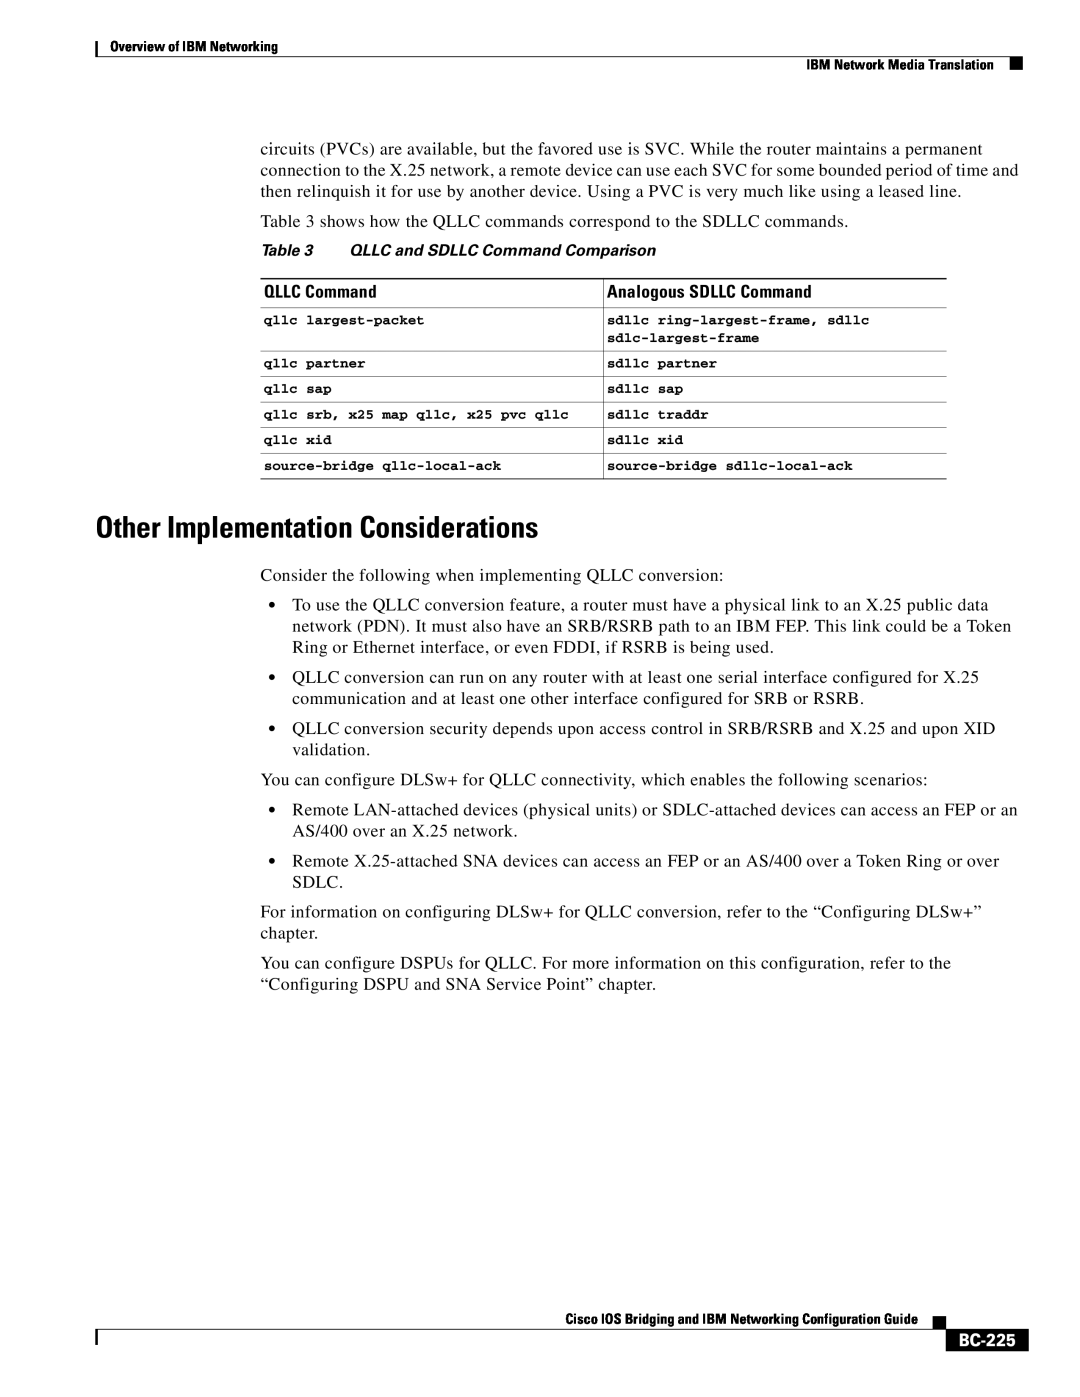 IBM BC-203 manual Other Implementation Considerations, QLLC Command, Analogous SDLLC Command, BC-225 